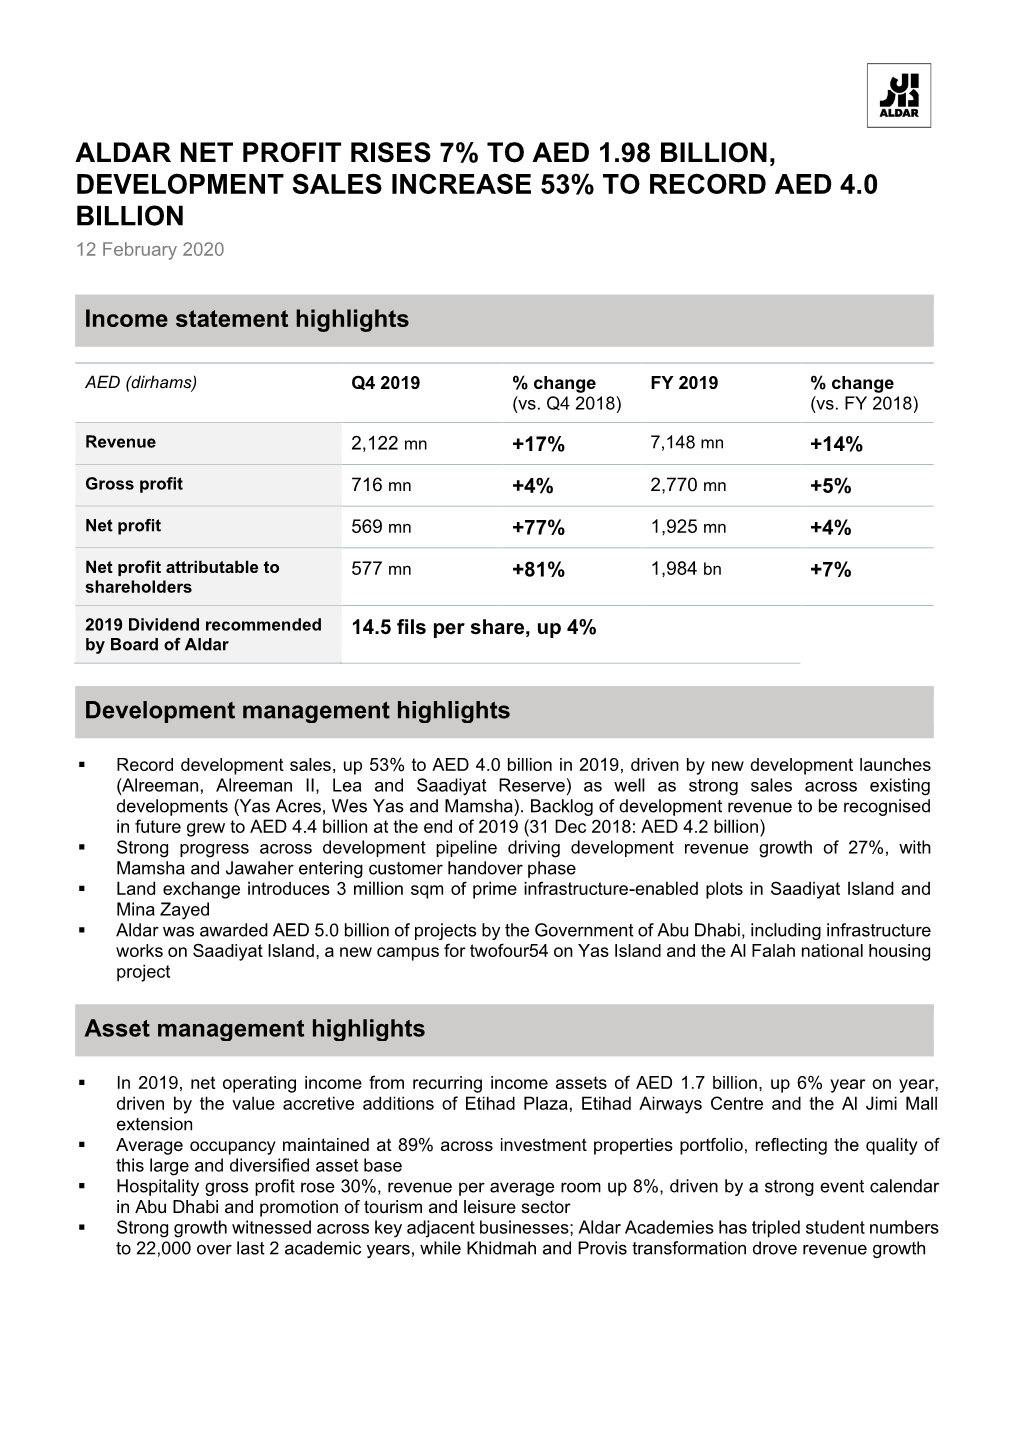 ALDAR NET PROFIT RISES 7% to AED 1.98 BILLION, DEVELOPMENT SALES INCREASE 53% to RECORD AED 4.0 BILLION 12 February 2020